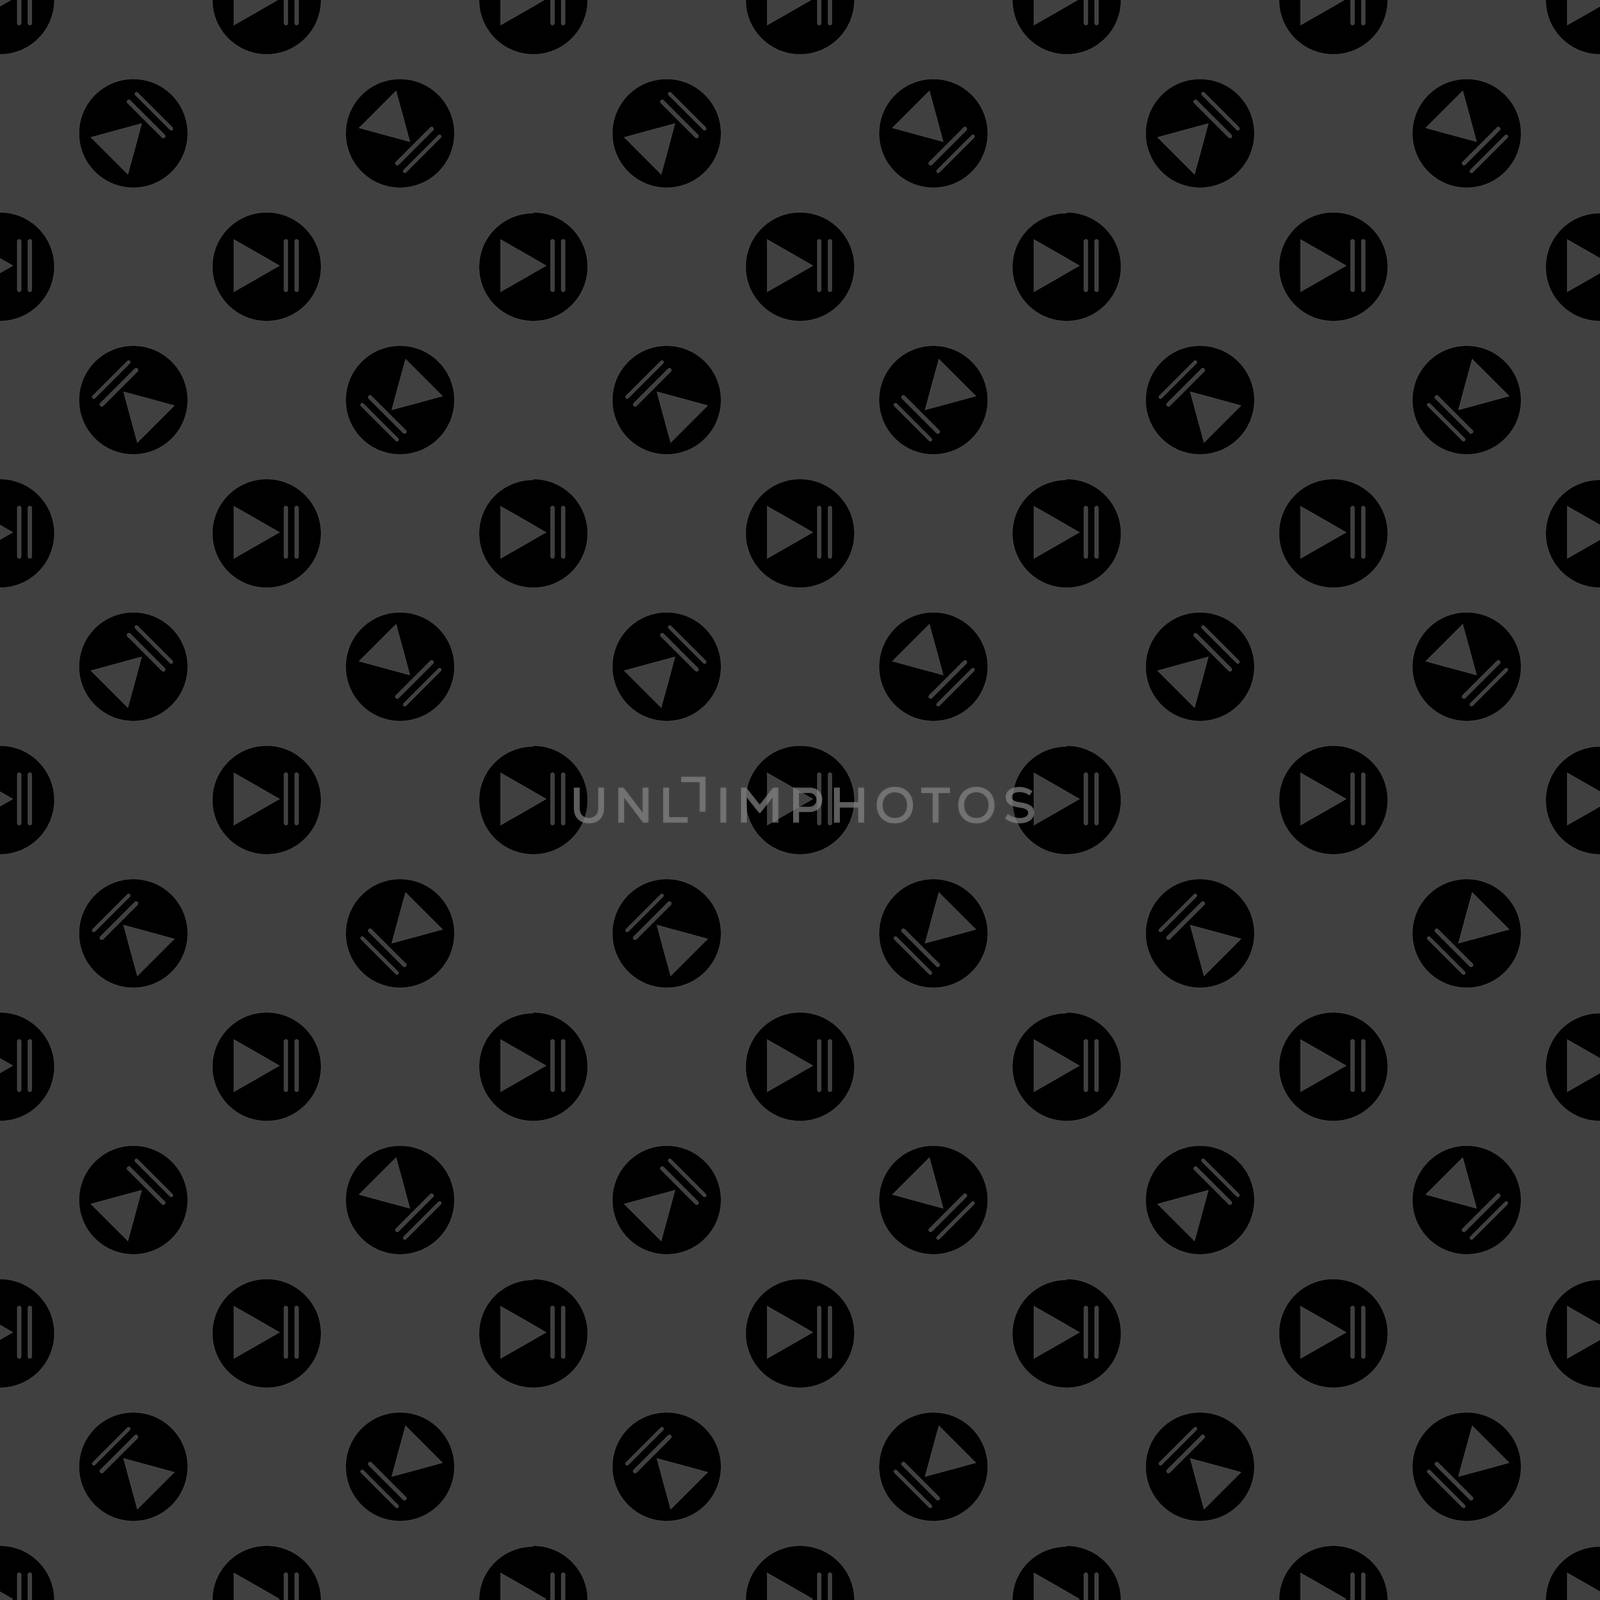 Play button web icon. flat design. Seamless pattern.